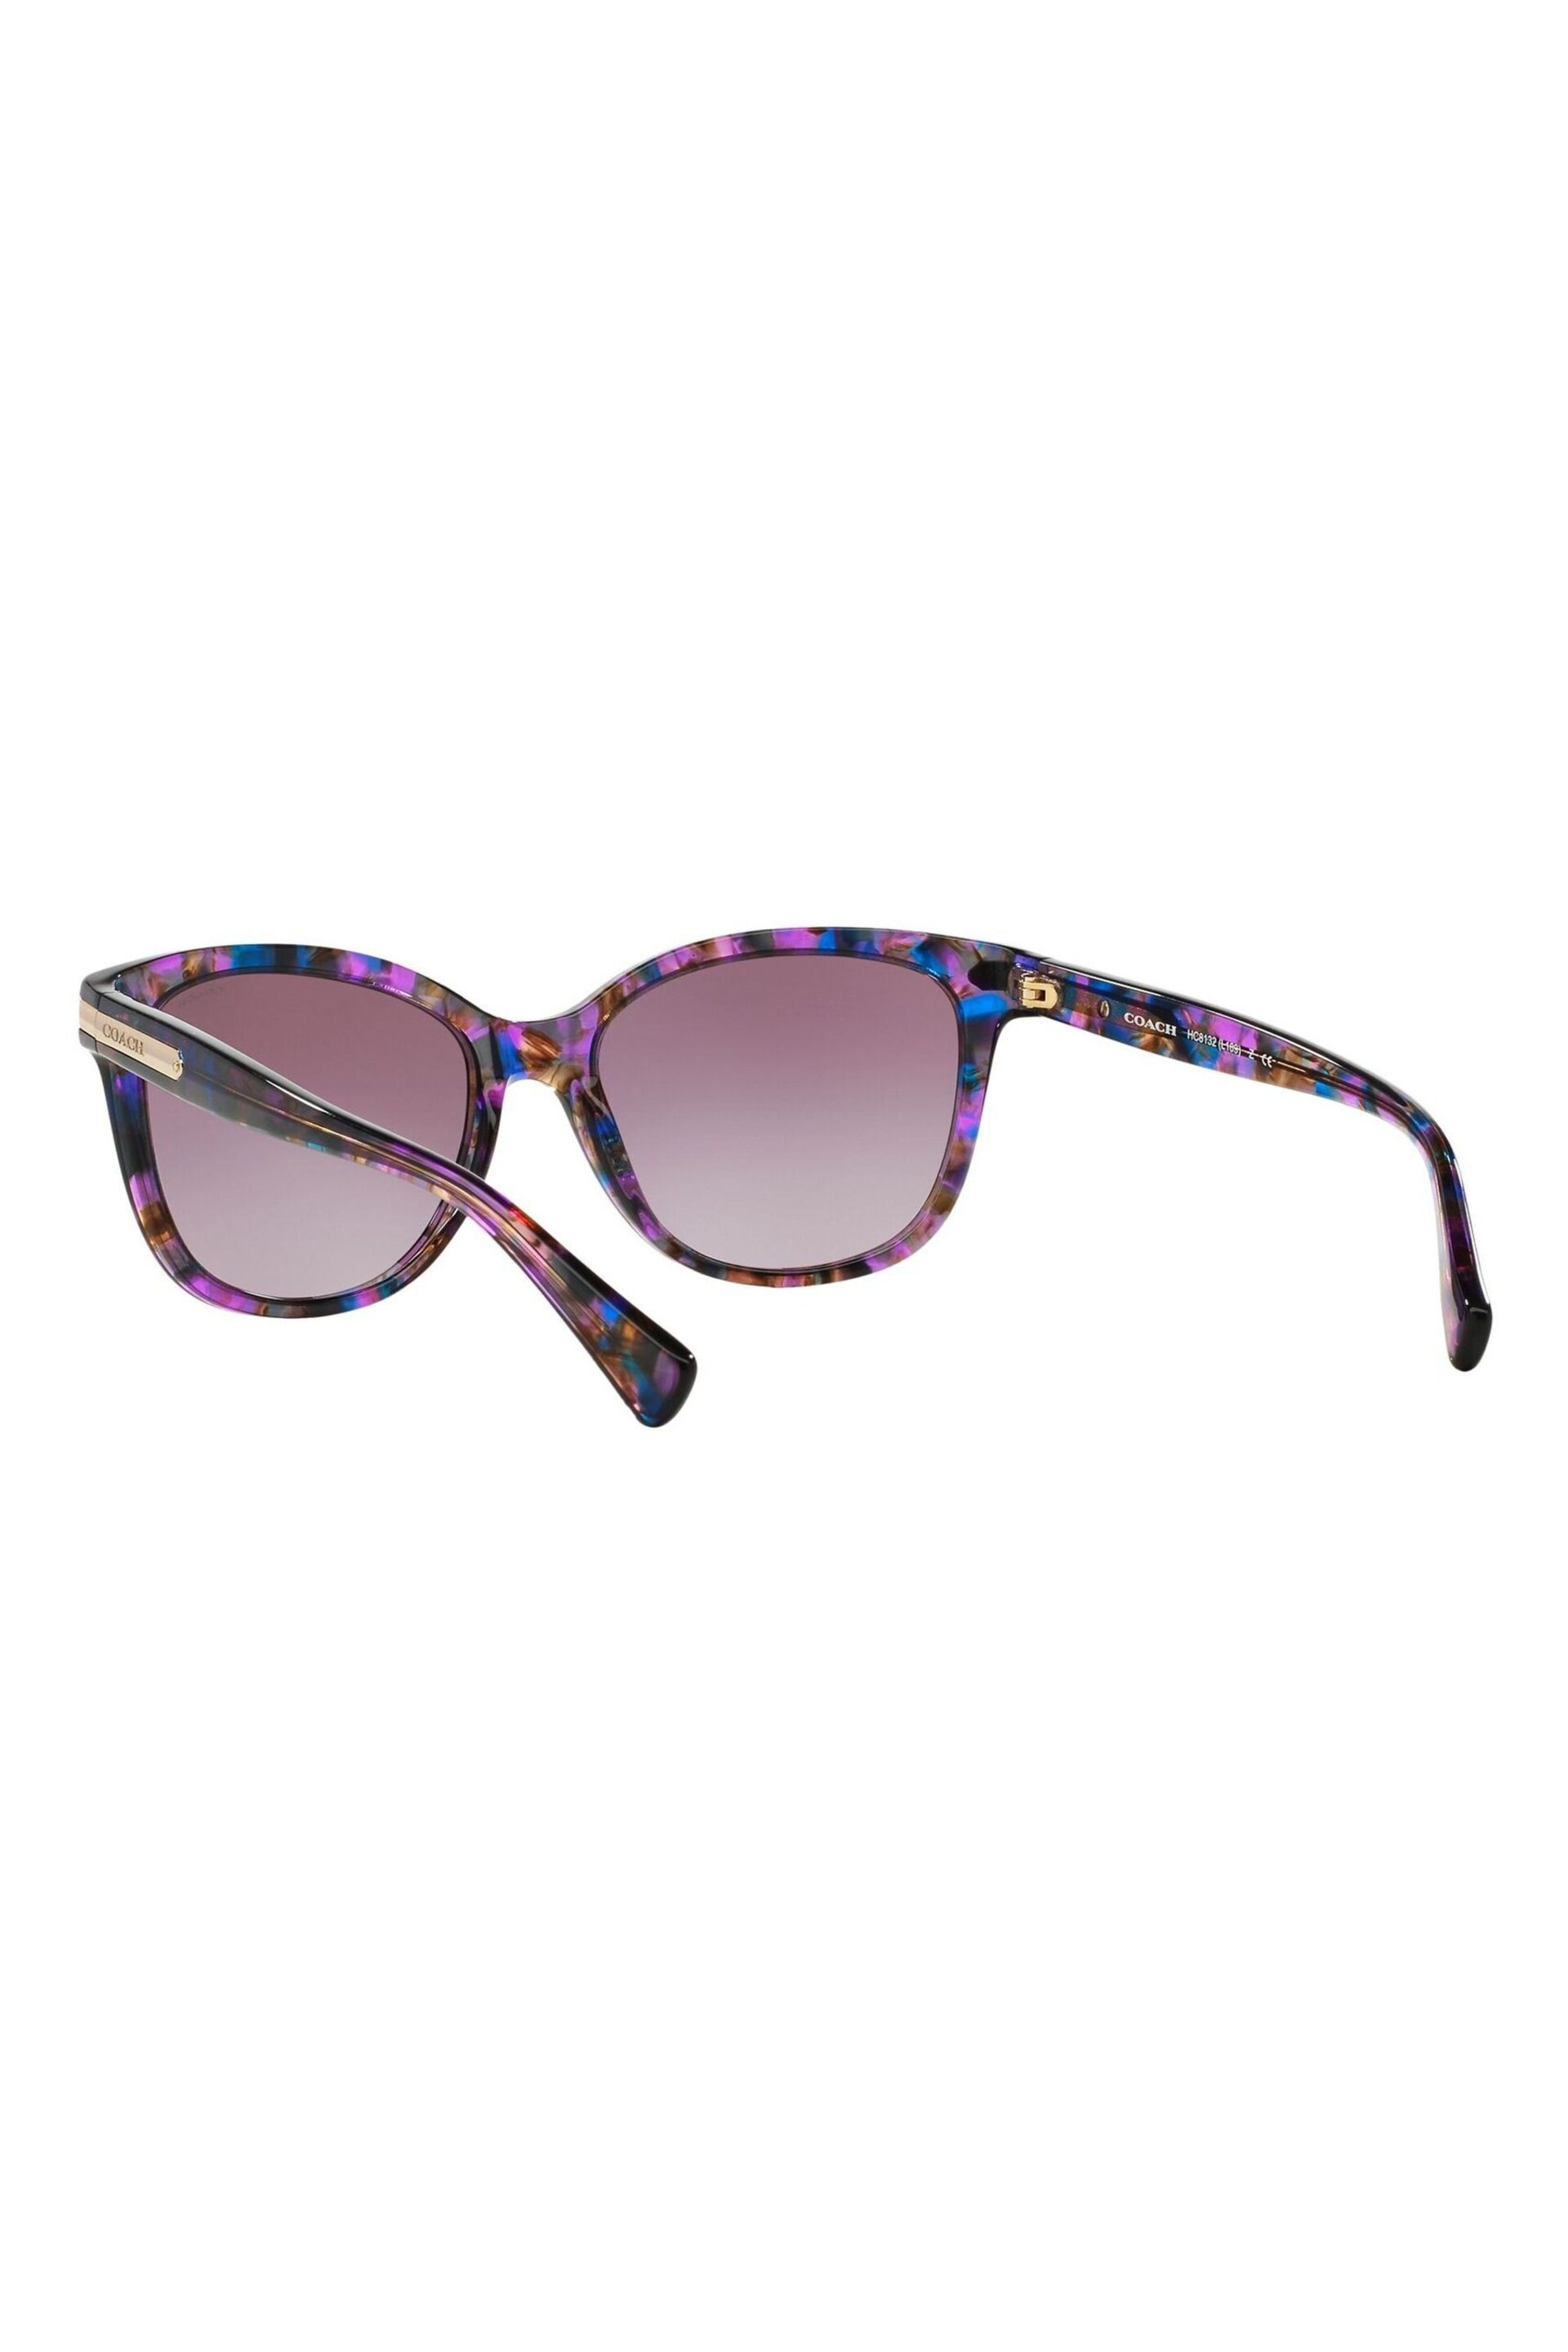 COACH Purple Sunglasses - Image 8 of 12